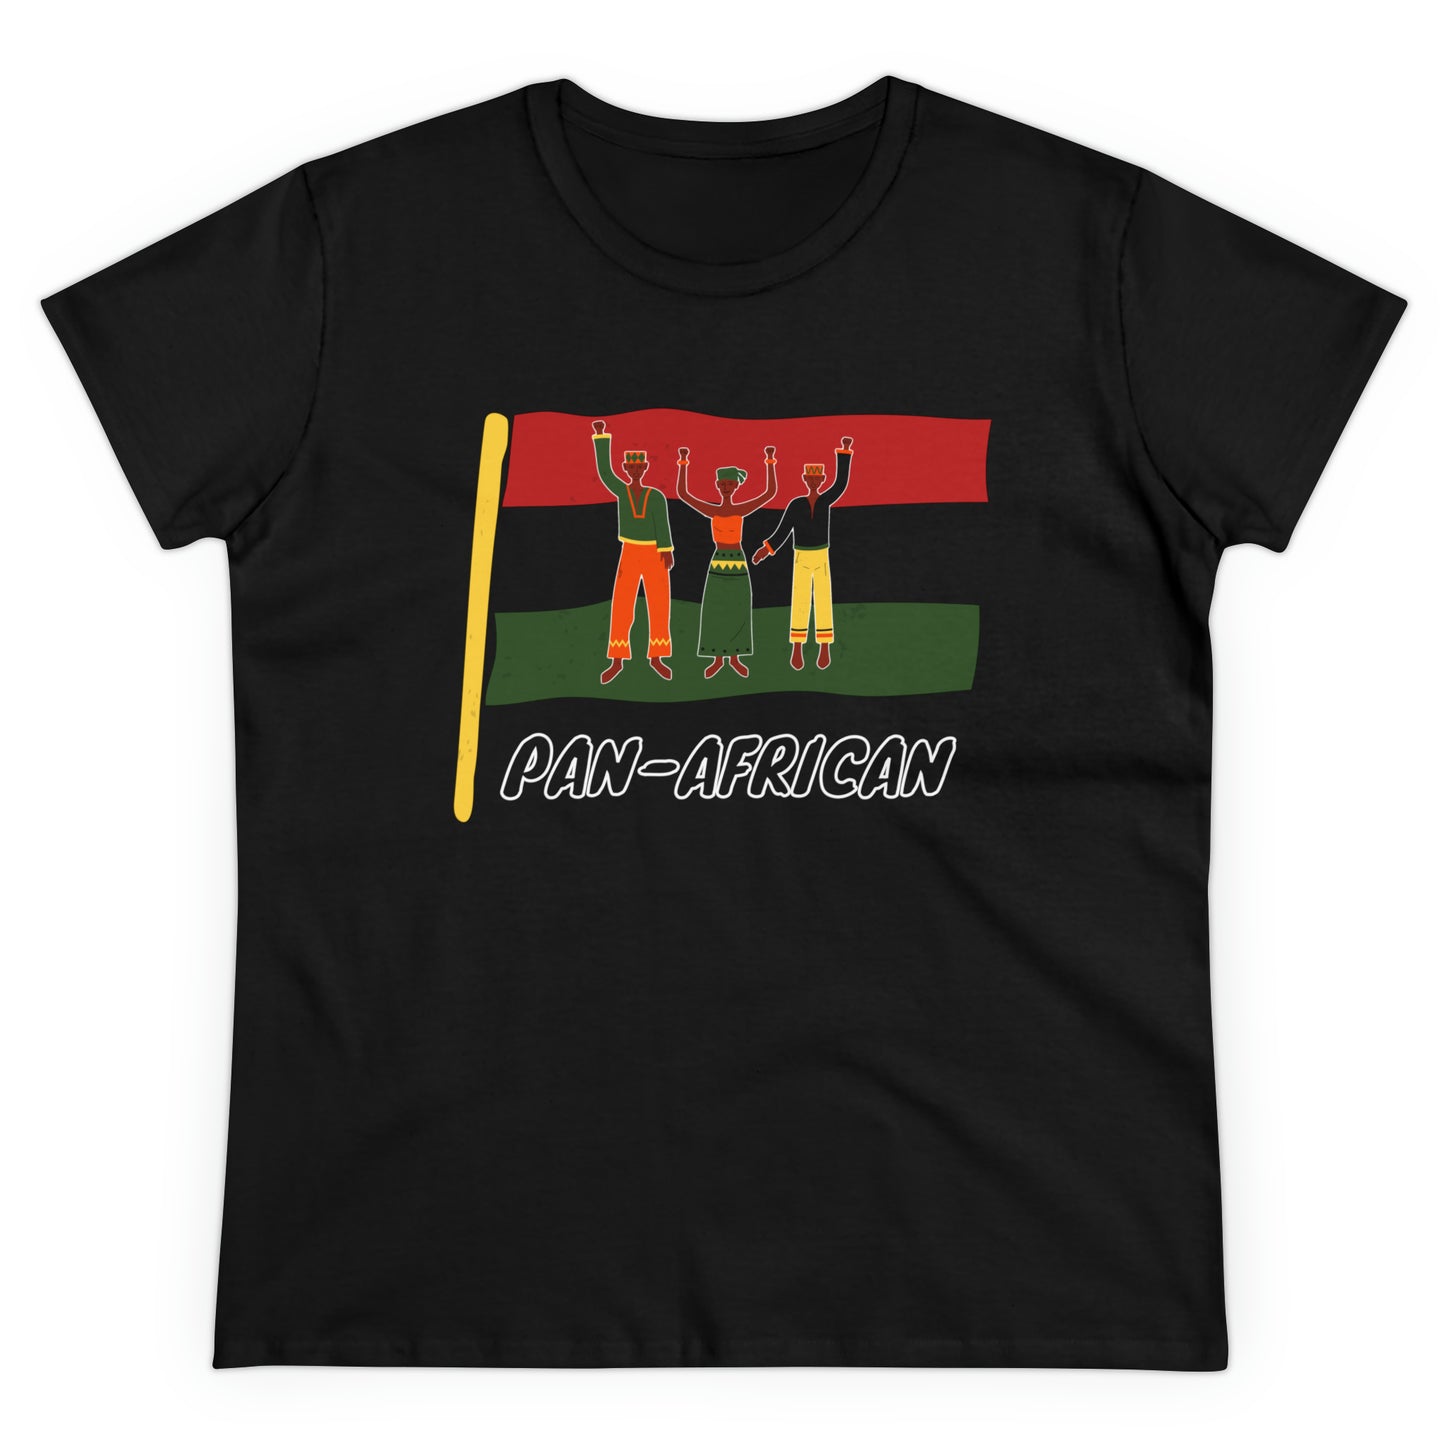 Women's Pan African Diaspora Flag Cotton Tee Shirt